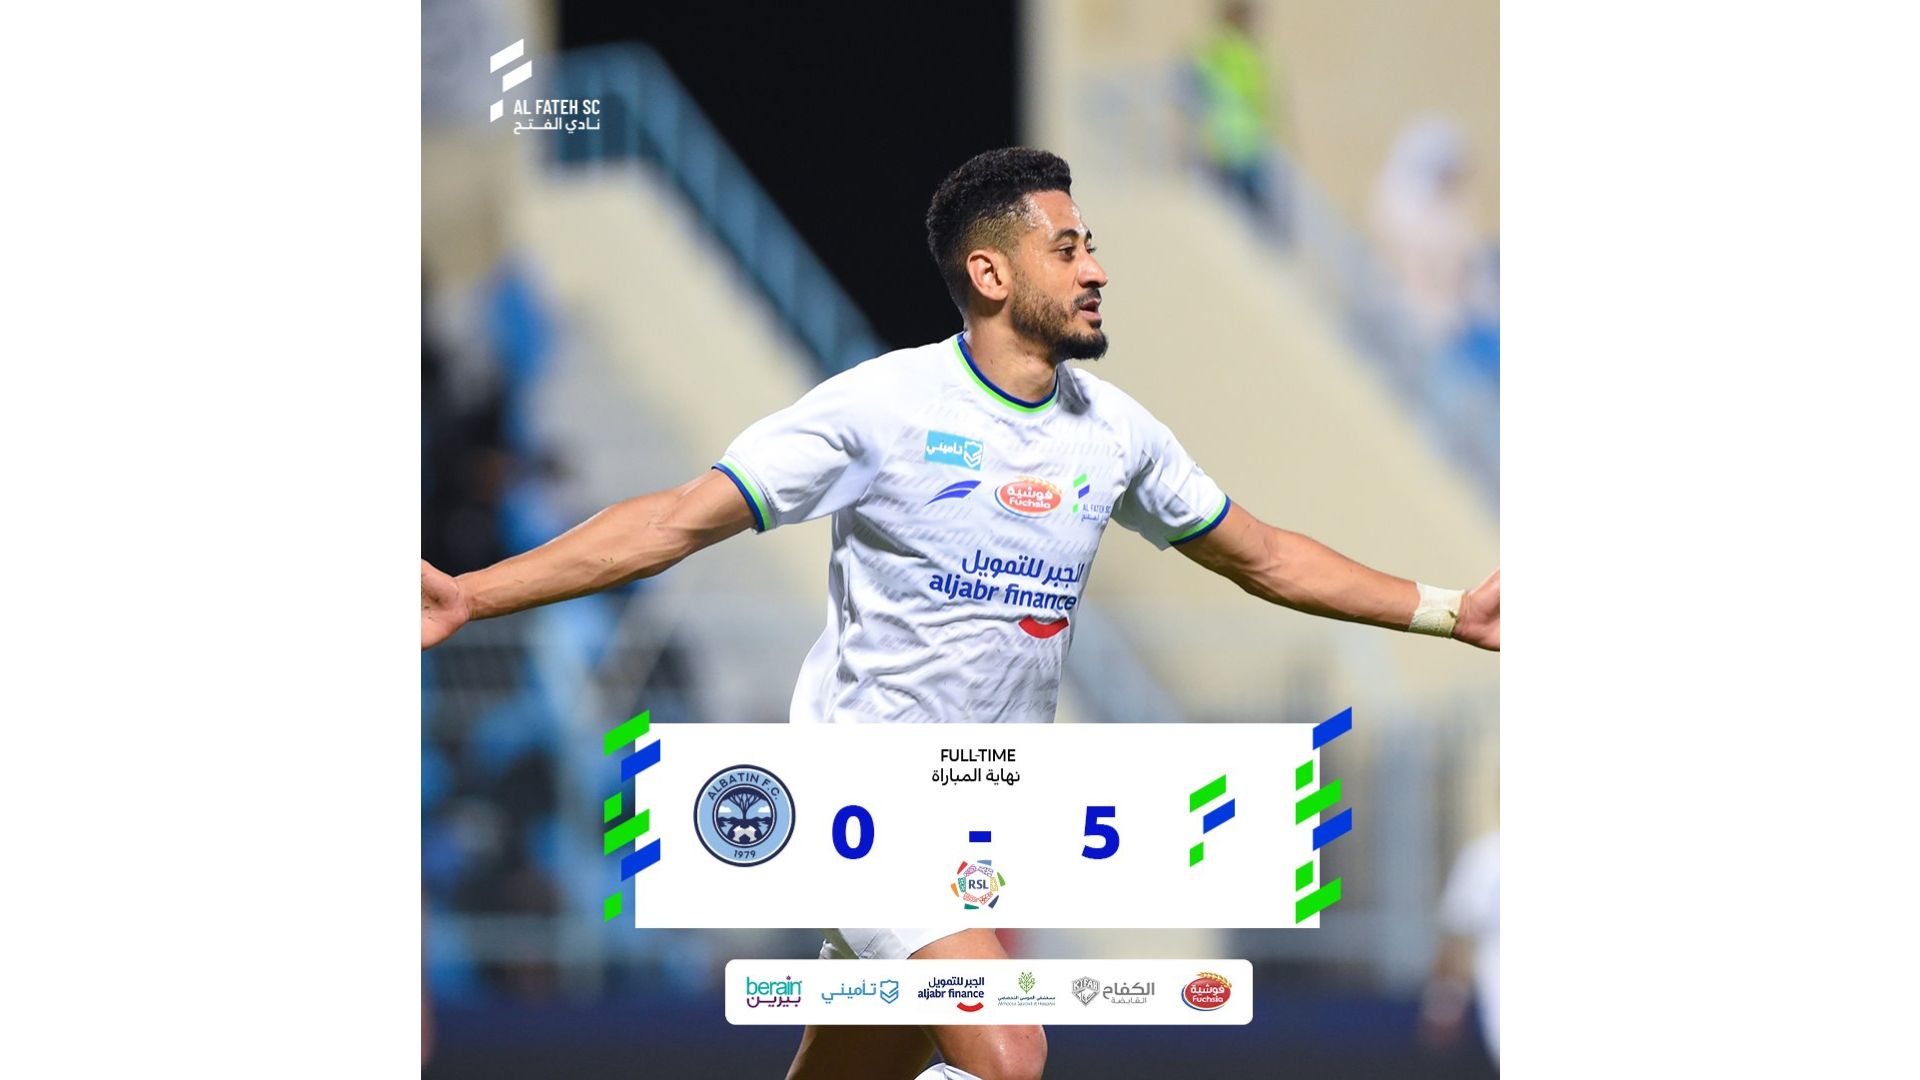 Al Fateh consiguió su primera victoria en la Liga Profesional Saudí. (Al Fateh)